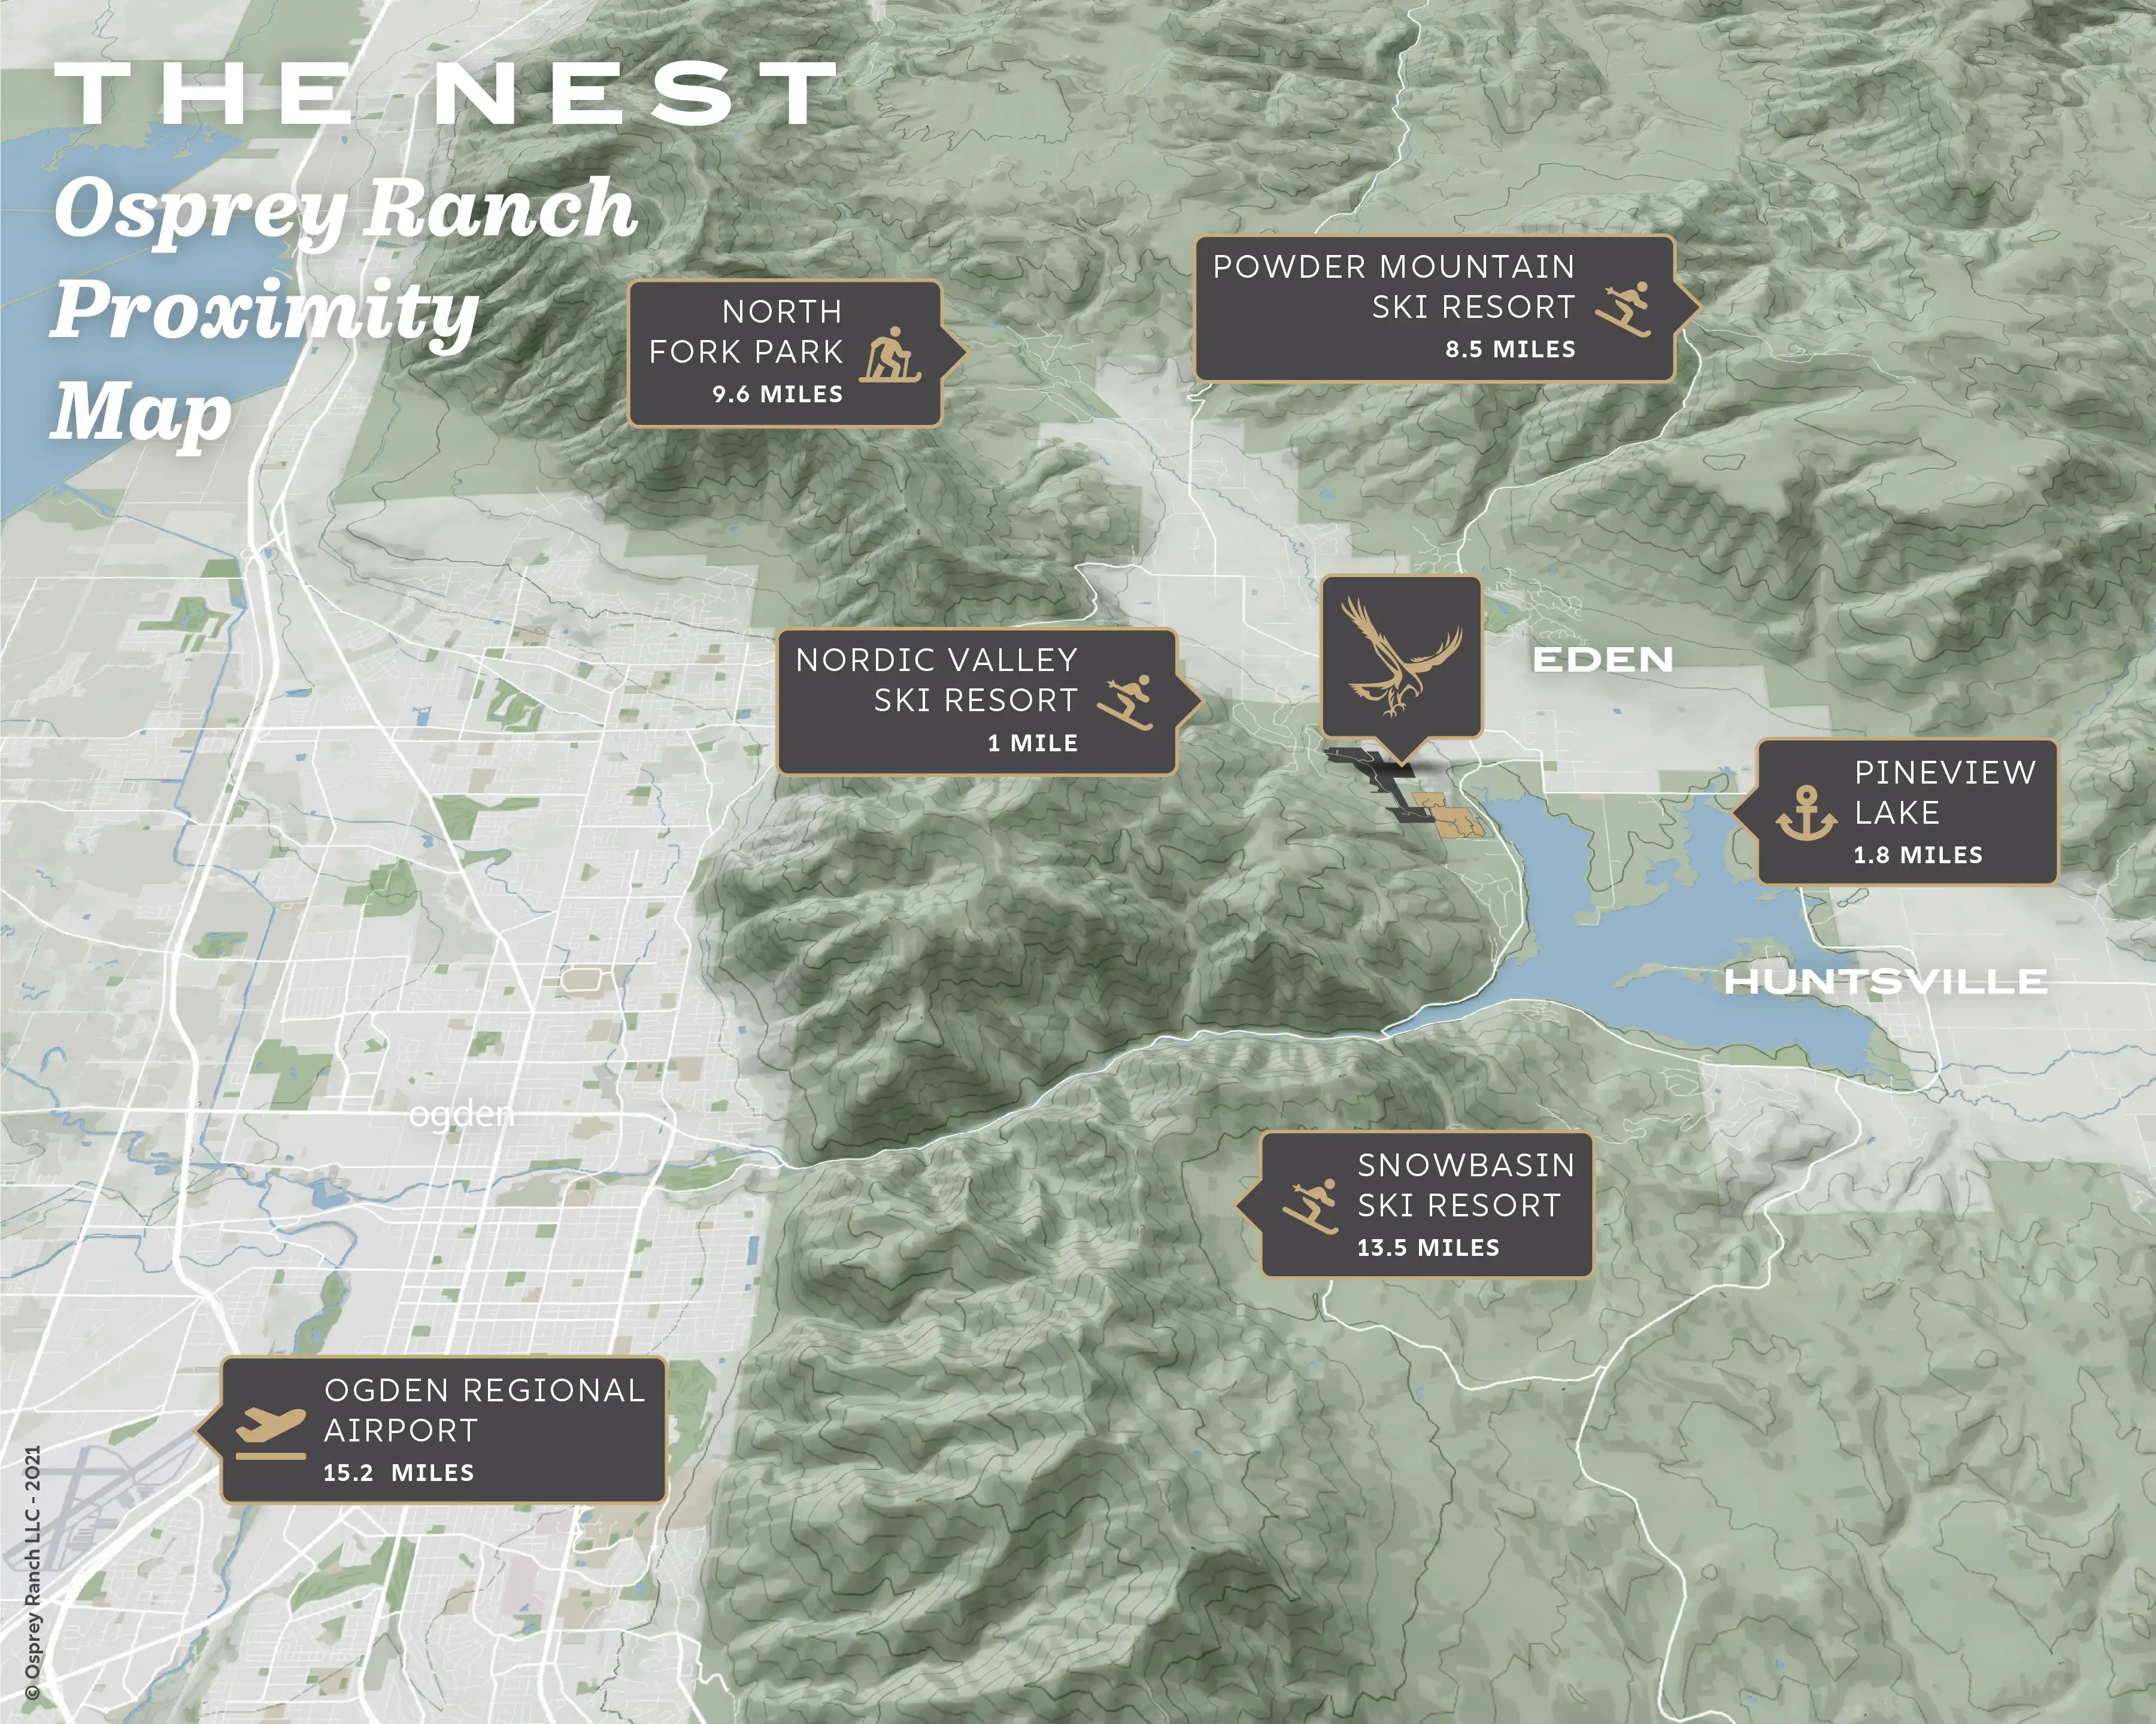 Osprey Ranch points of interest map.